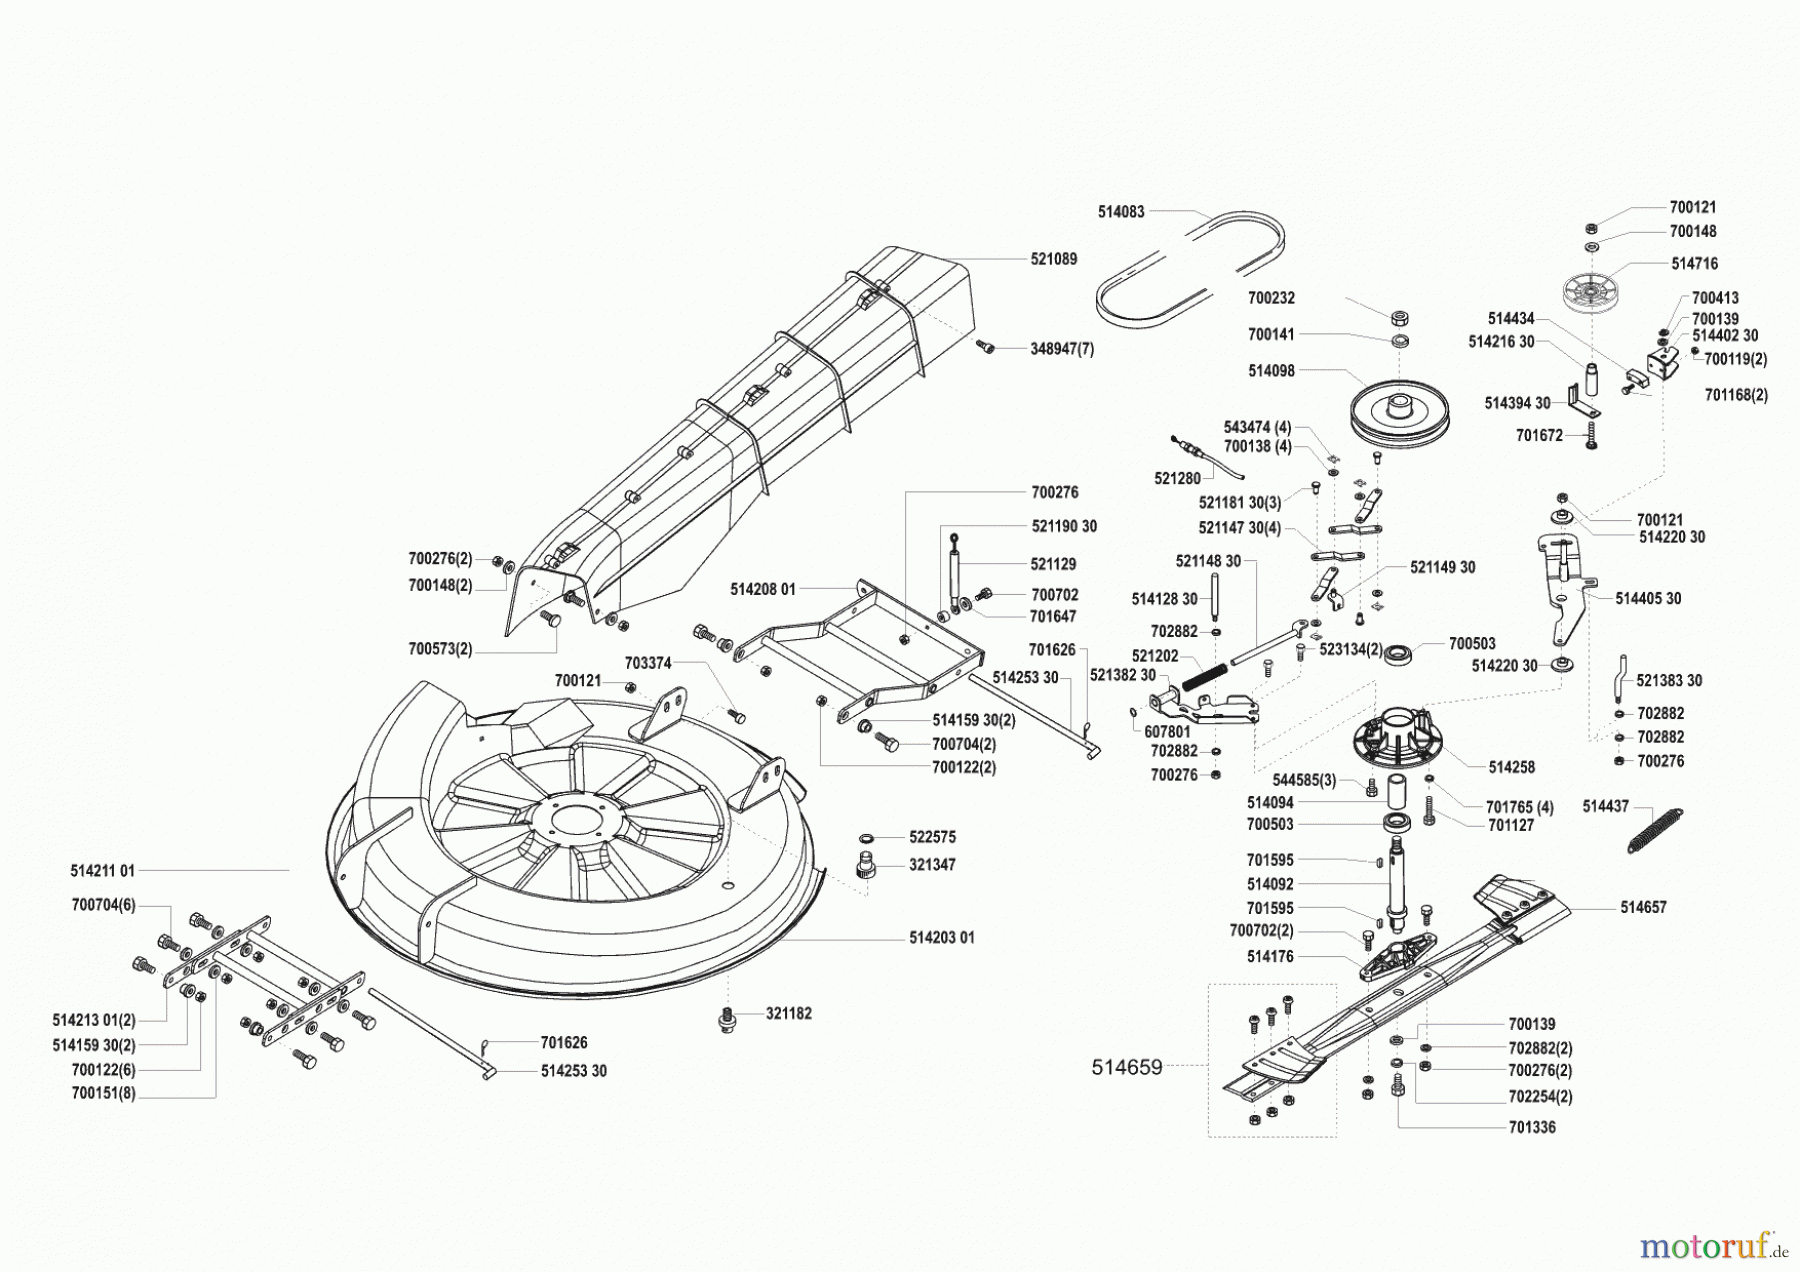  AL-KO Gartentechnik Rasentraktor T 10  ab 01/2001 Seite 5